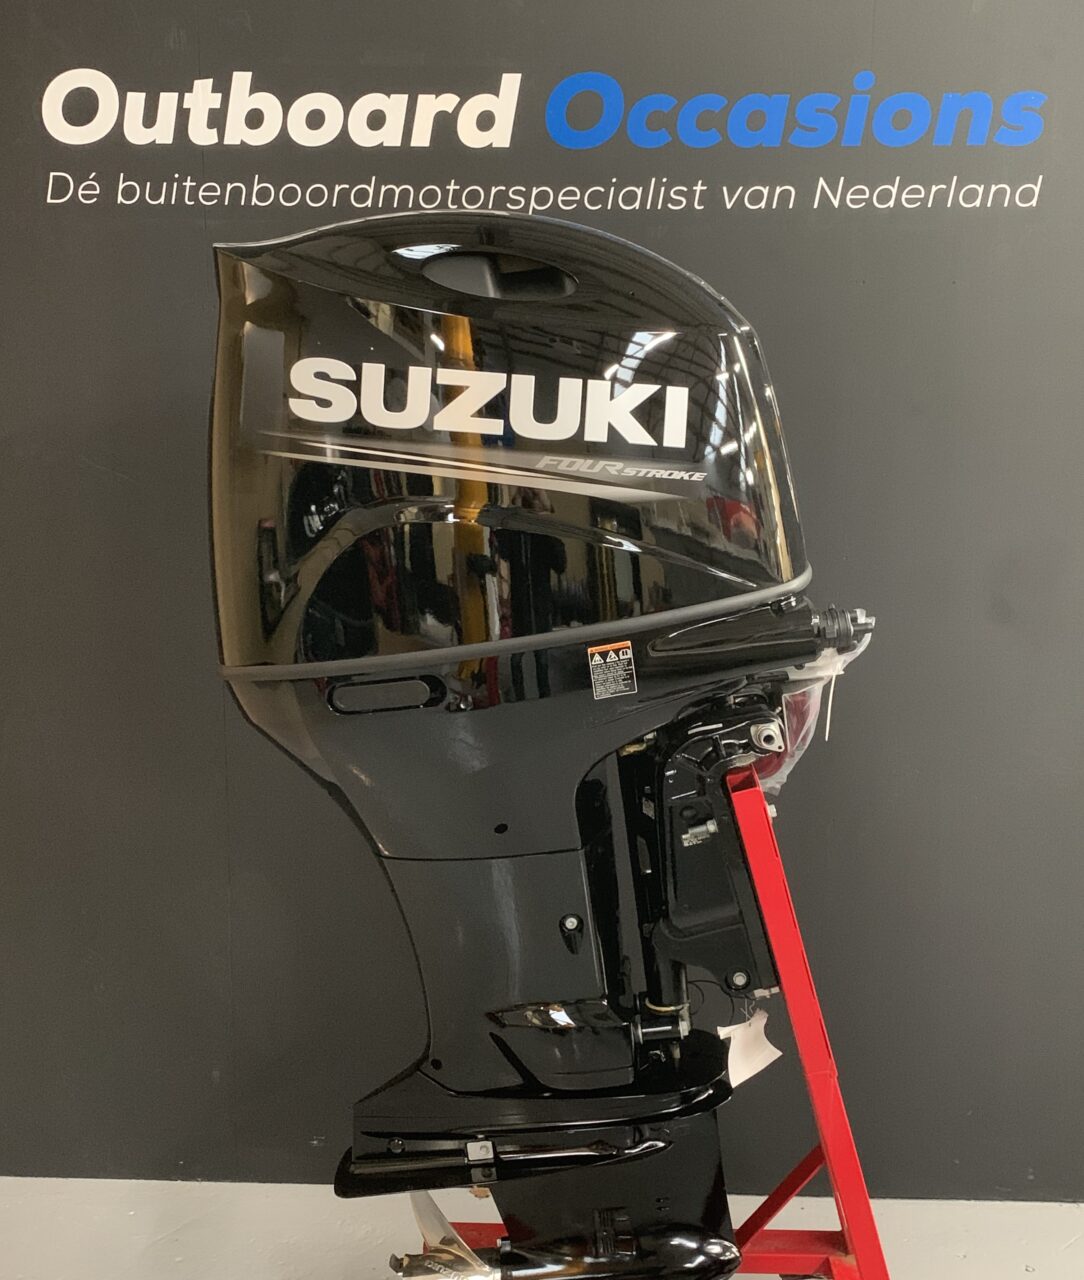 Suzuki 200 PK EFI outboard engine